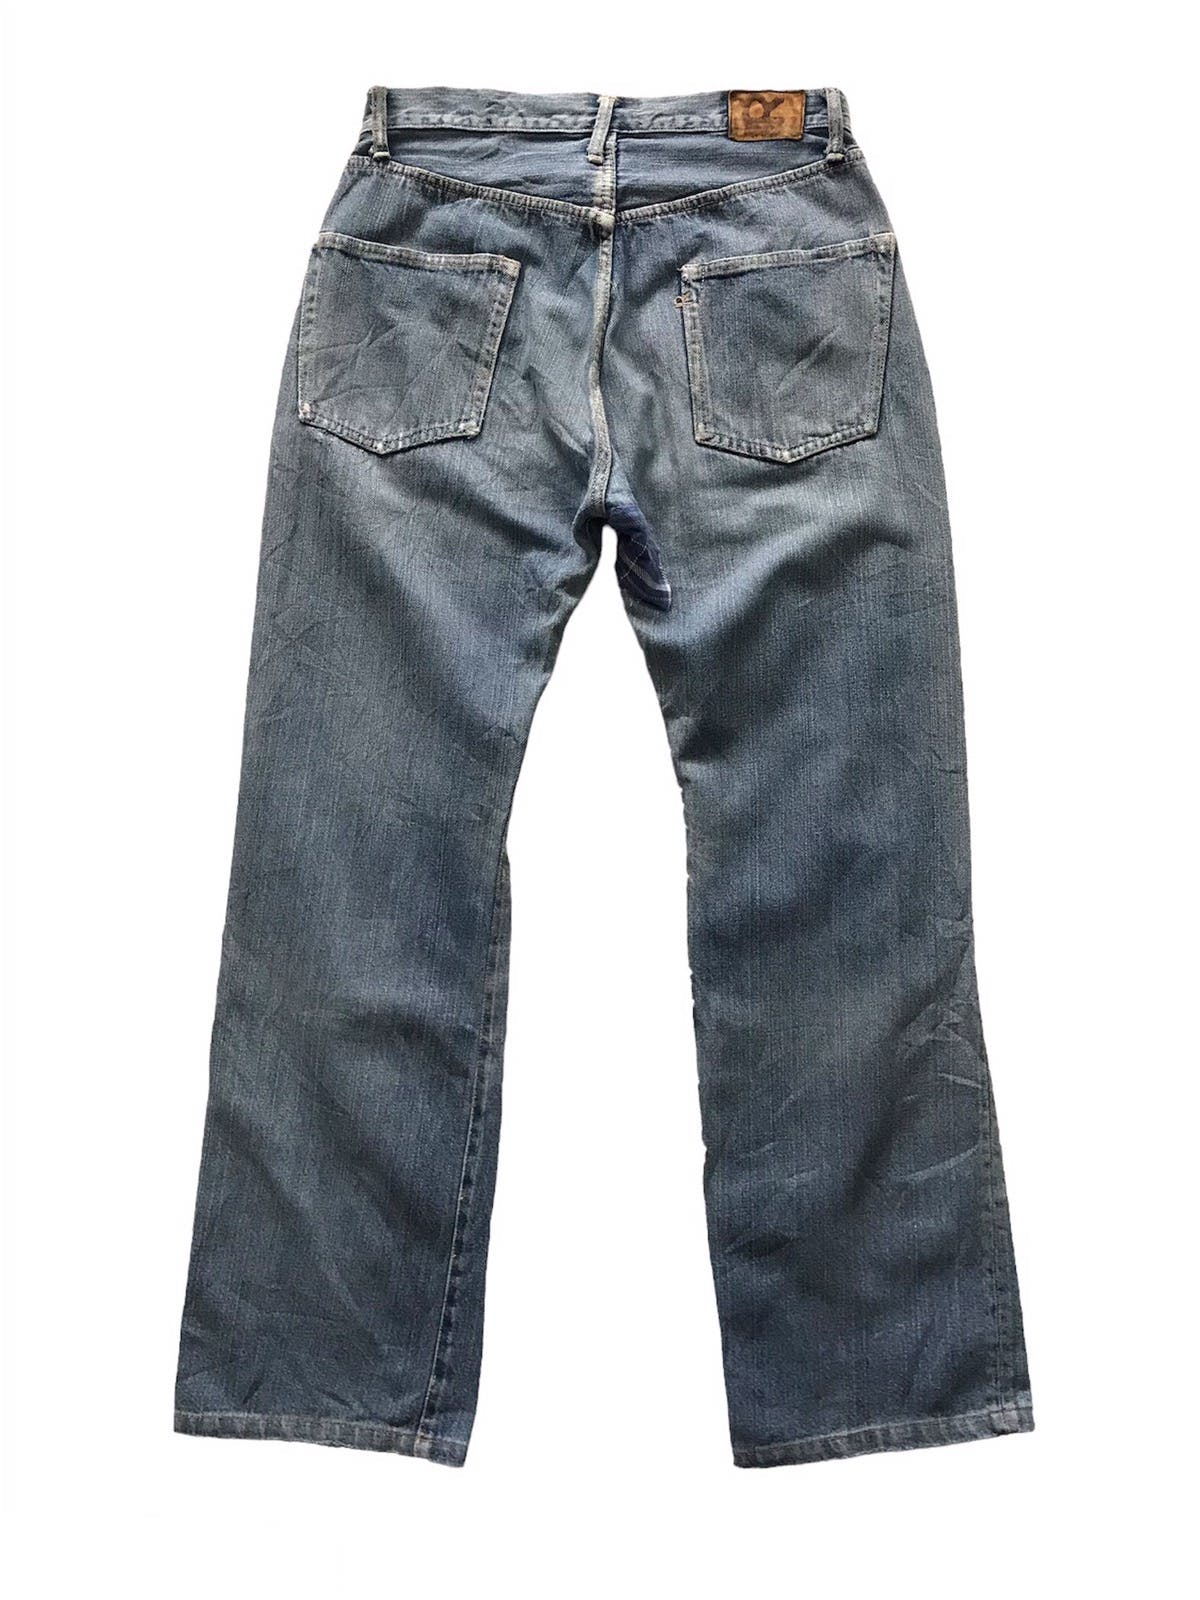 45rpm - Distress R 45 Rpm Denim Jeans Pant - 2